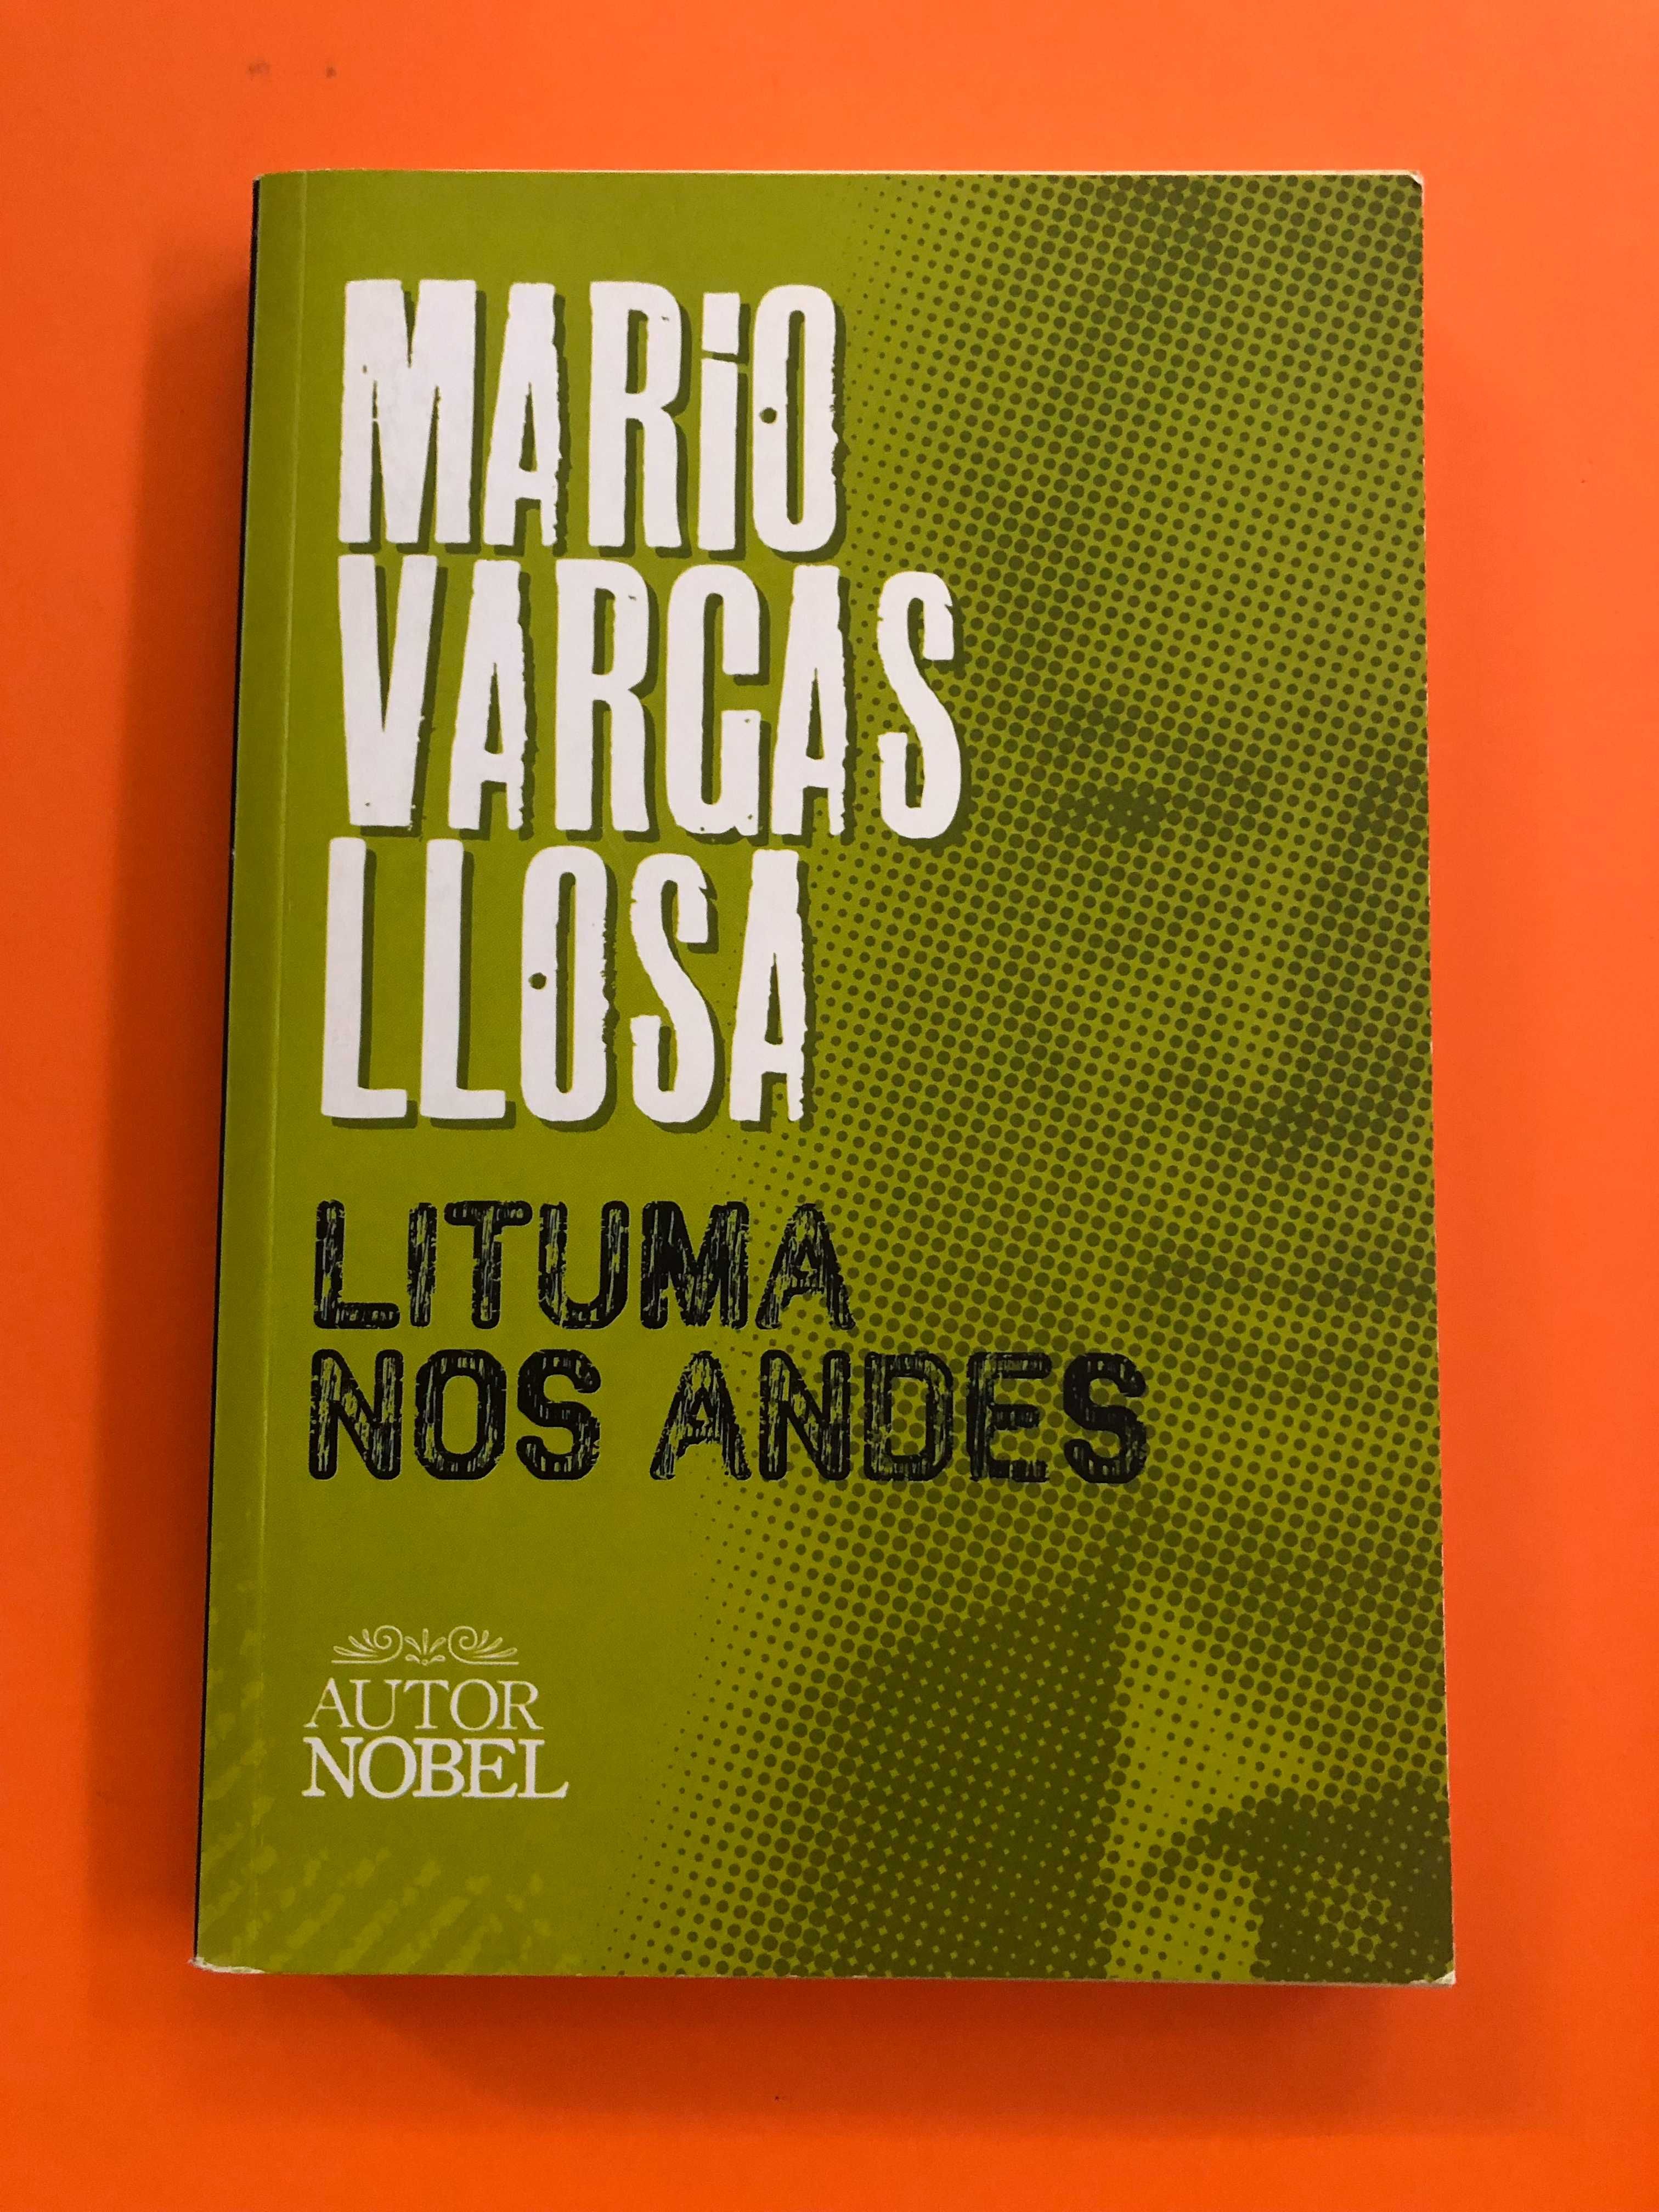 Lituma nos Andes - Mario Vargas Llosa